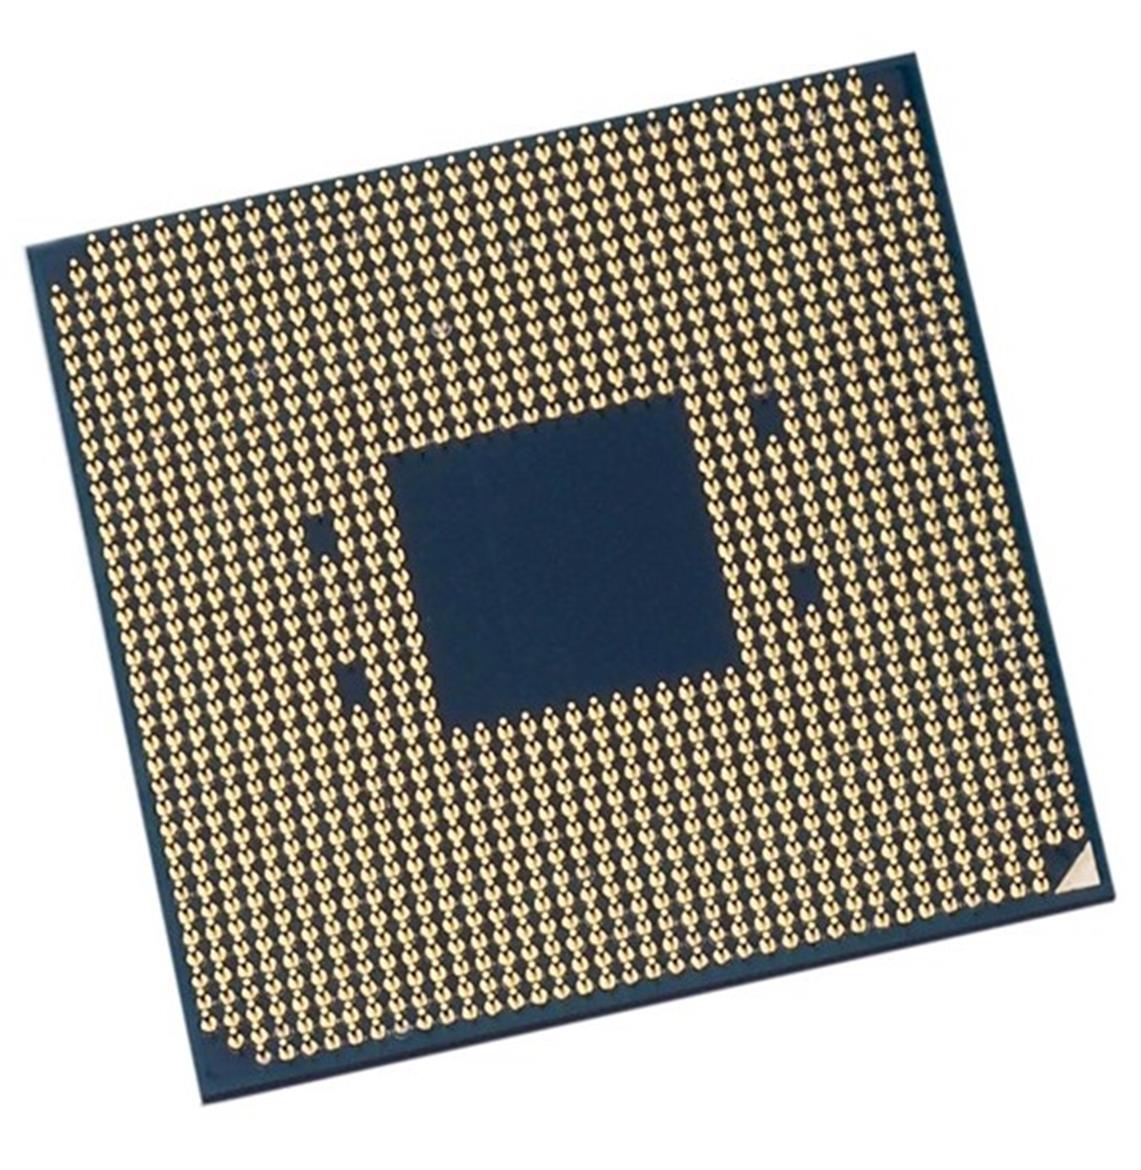 AMD Ryzen 9 3900X Vs Intel Core i9-9900K IPC Shootout: Did AMD Close The Gap?